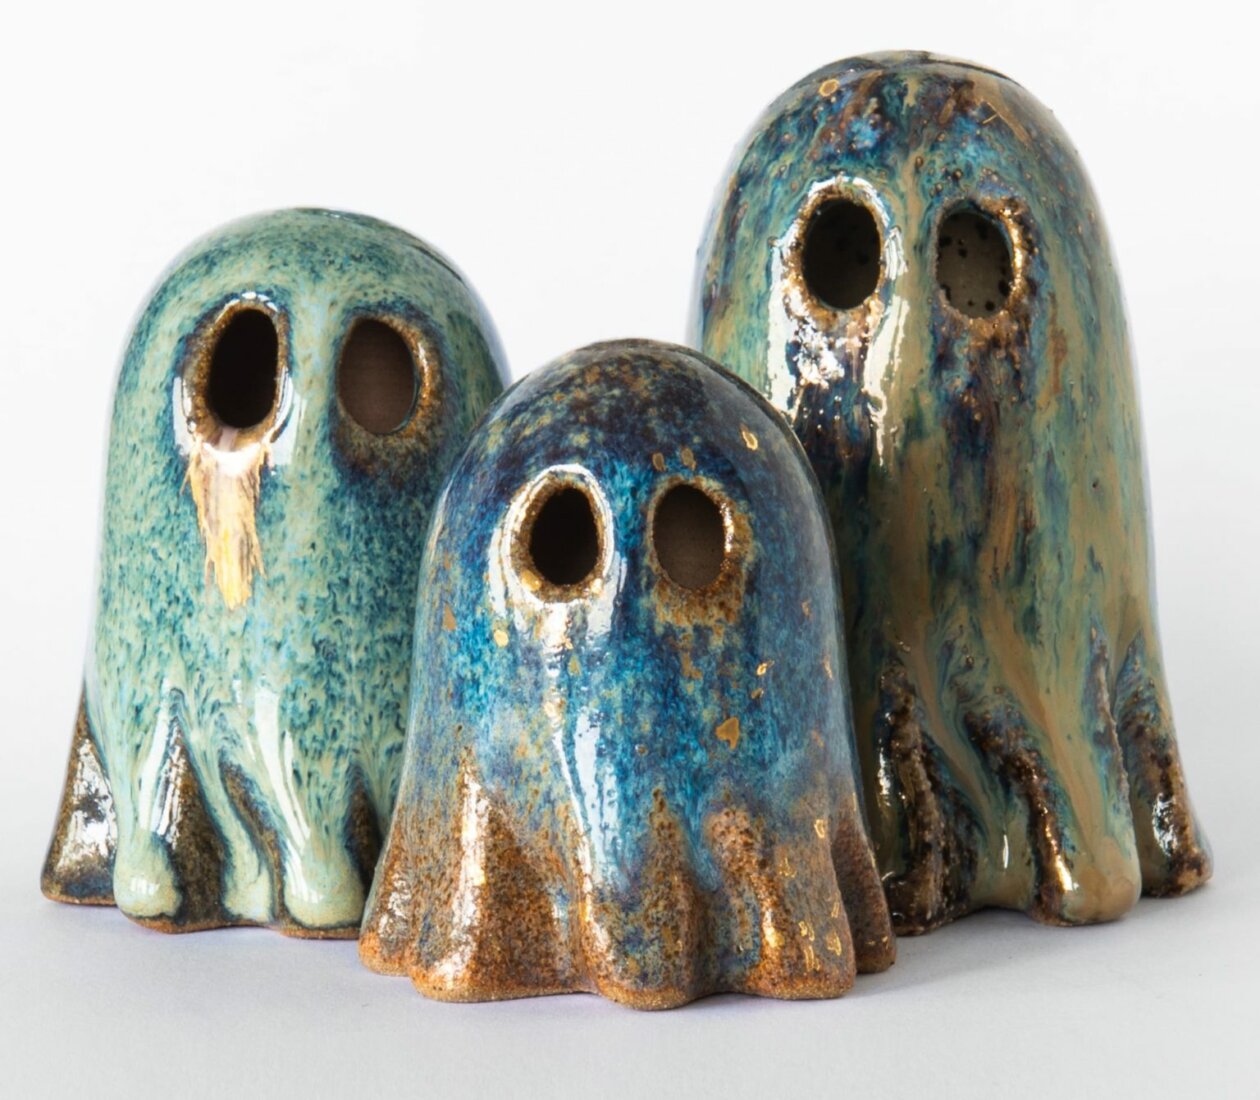 Fun Tiny Ceramic Ghosts By Lisa Agnetun (2)